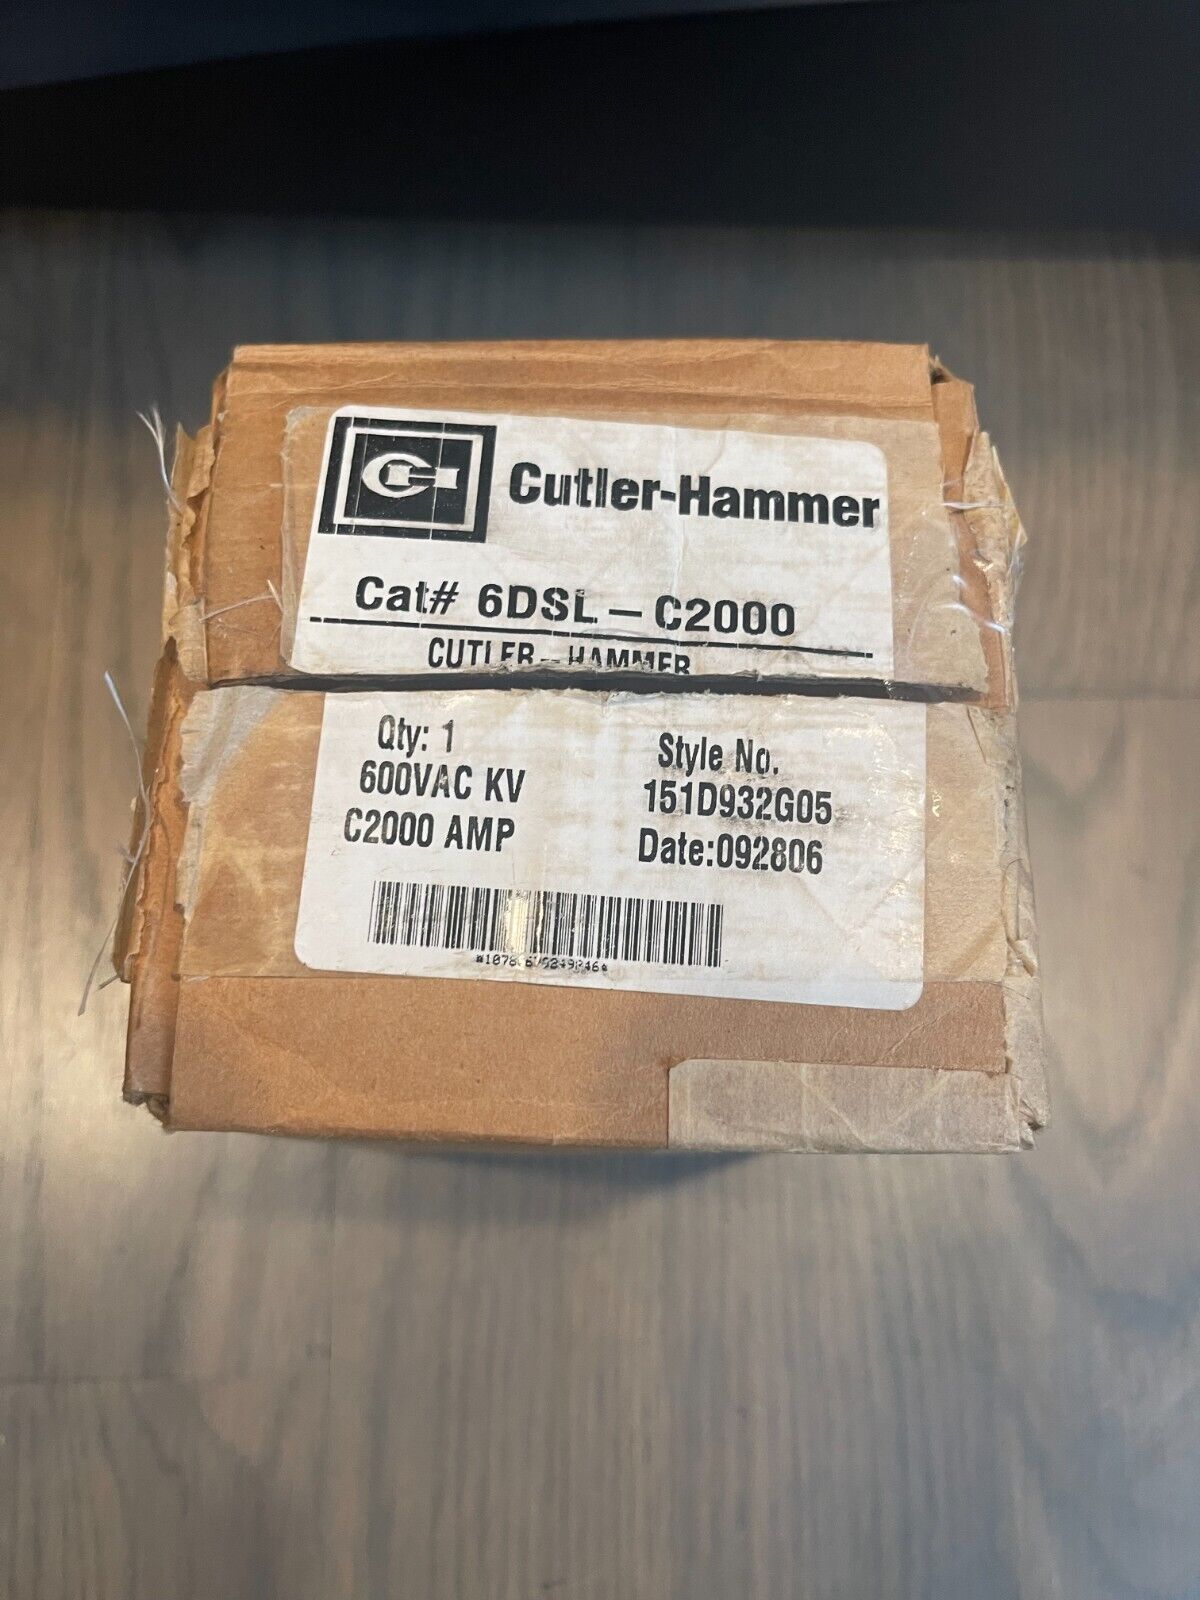 New Cutler Hammer Fuse 600VAC KV C2000 Cat # 6DSL-C2000 AMP Style No. 151D932G05